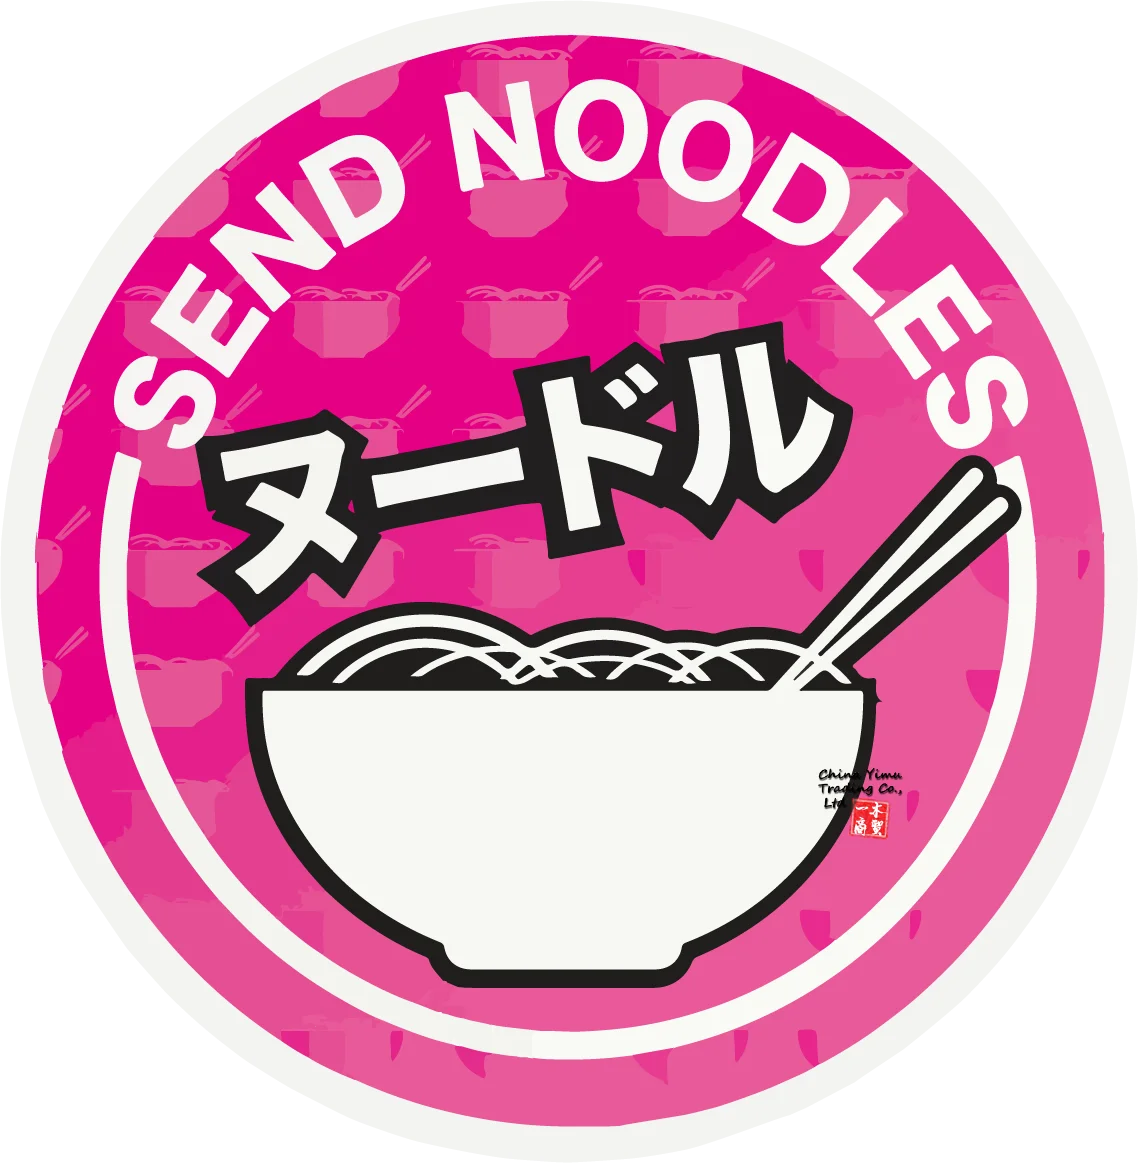 

Japan Decal Send Noodles Funny JDM Kanji Drift Car Laptop Window Bumper Vinyl Decal Japanese Sticker